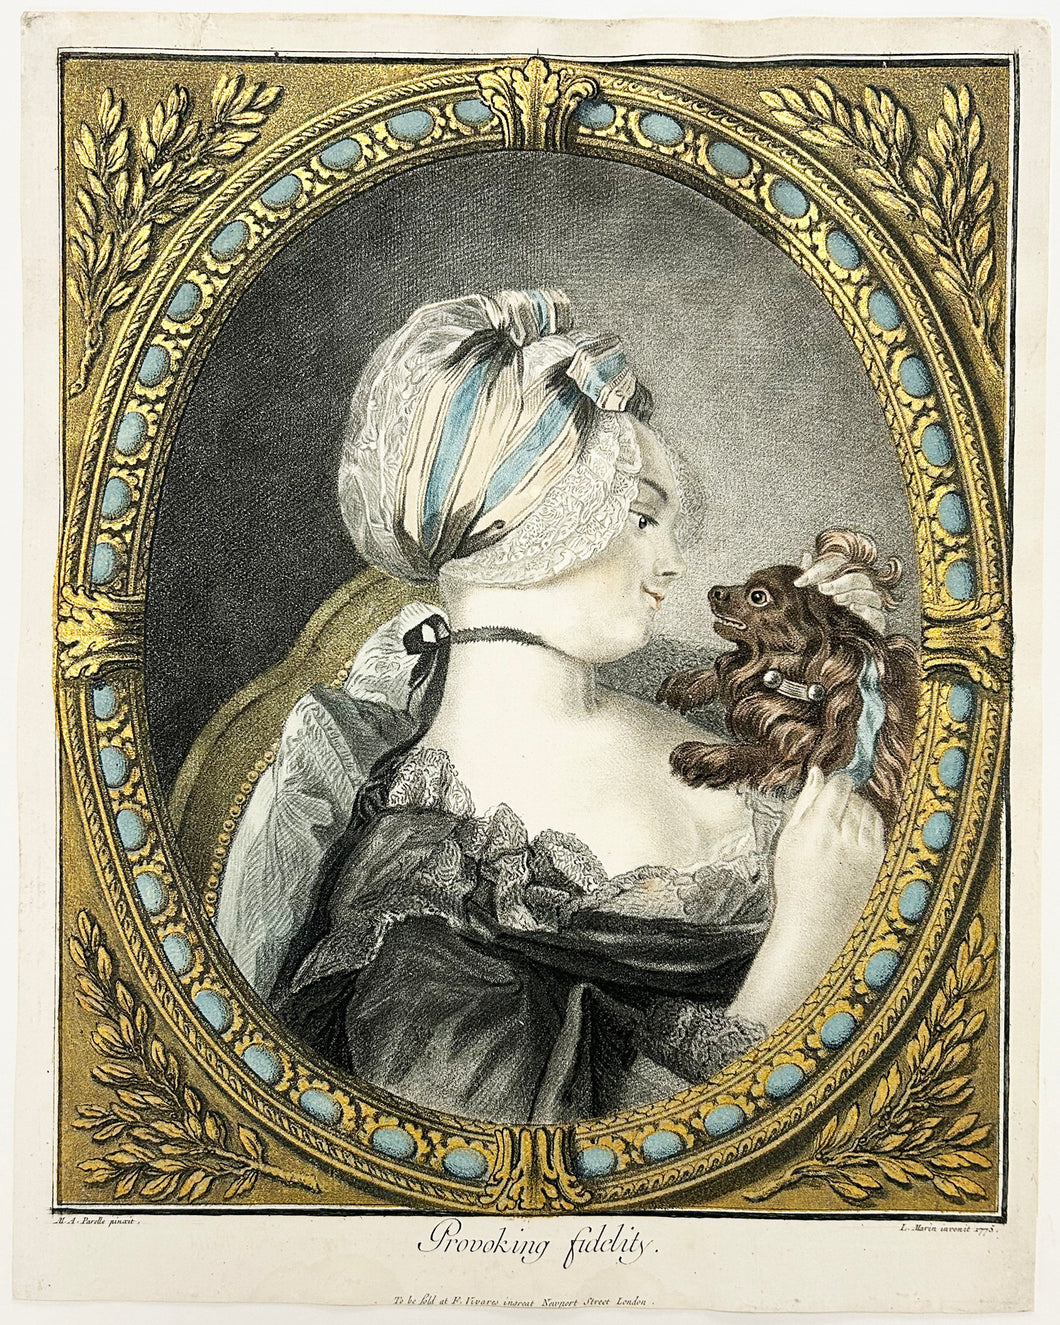 Provoking fidelity.  1775.